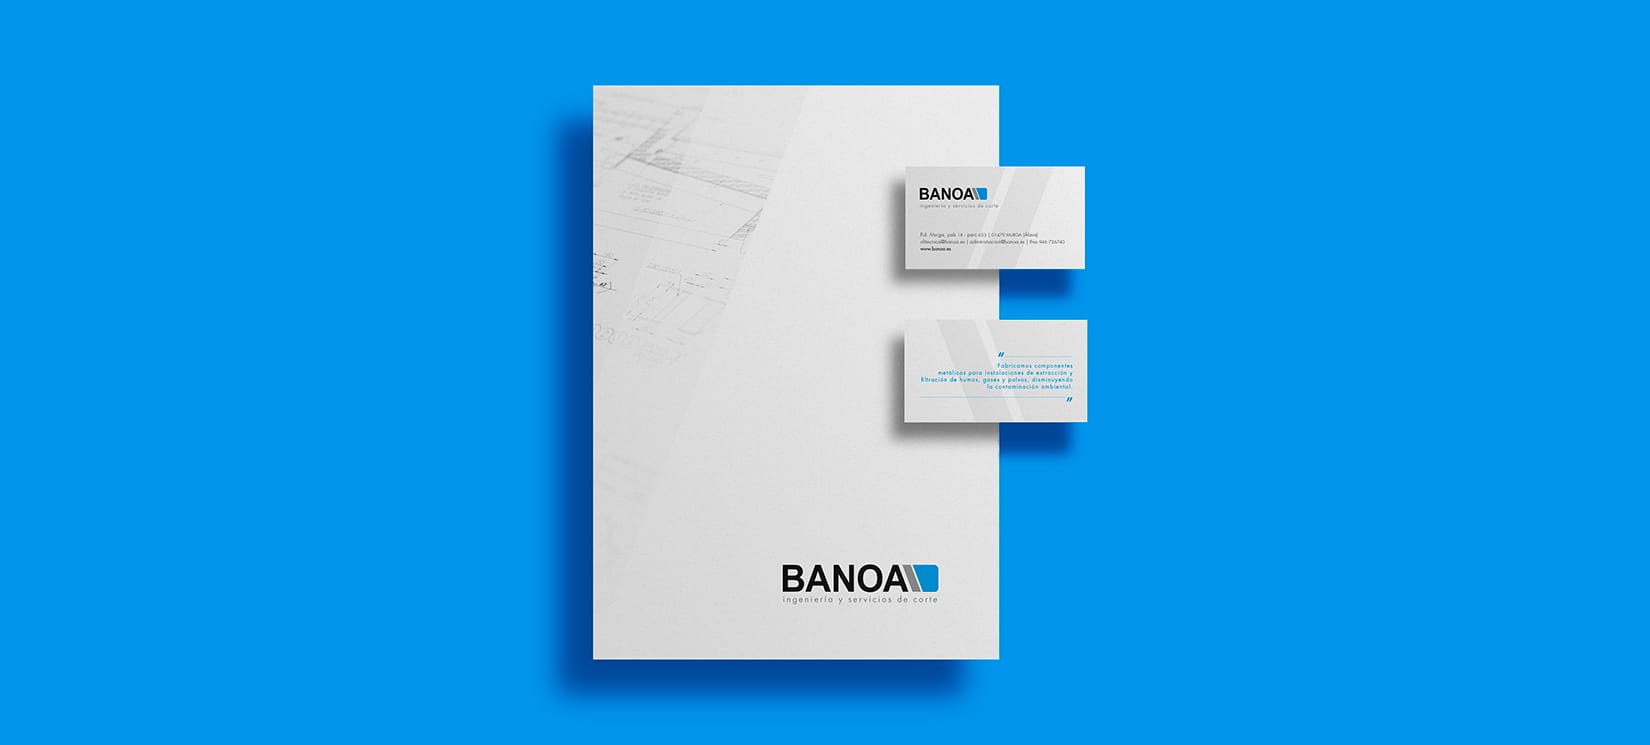 branding donostia diseño identidad corporativa banoa